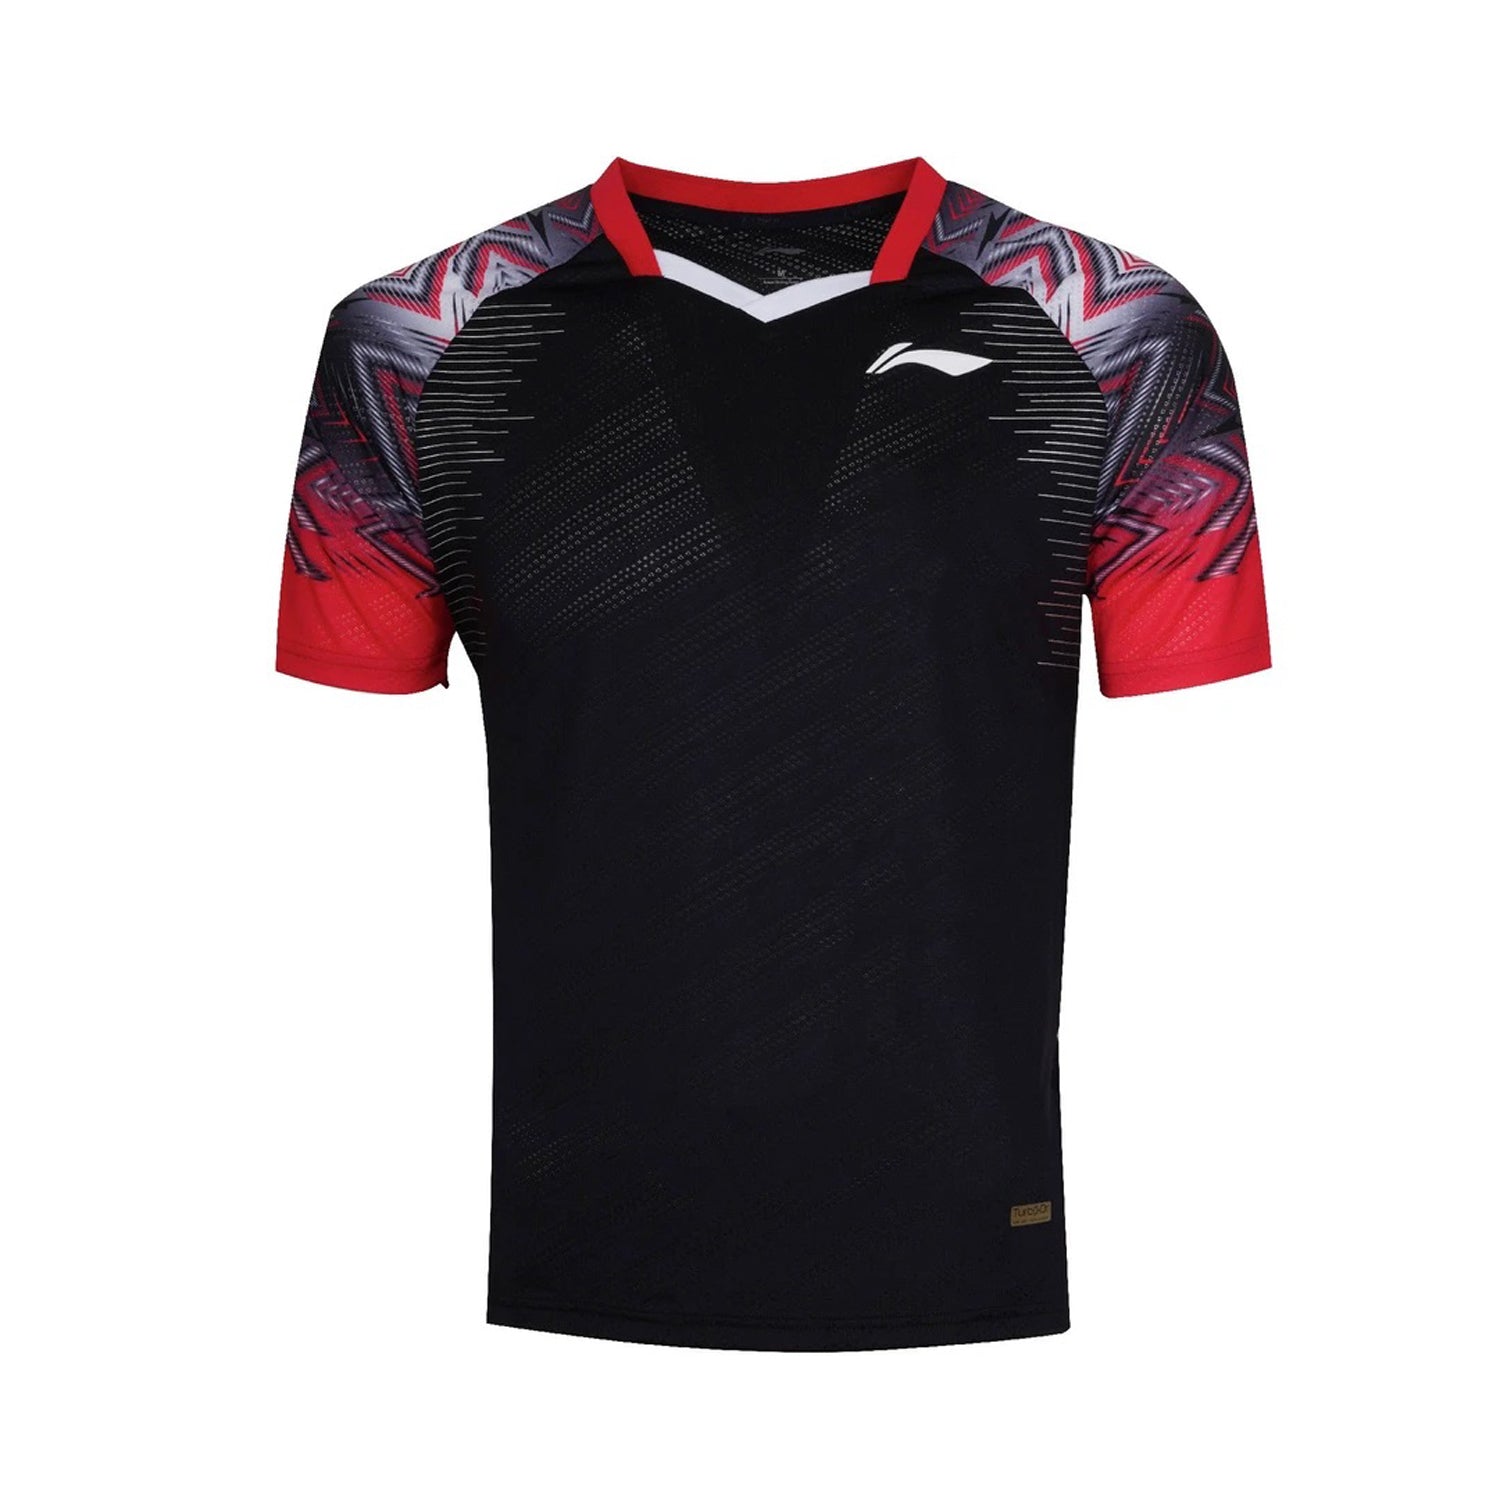 Li-Ning ATSS995 Round Neck Badminton Tshirt, Black - Best Price online Prokicksports.com